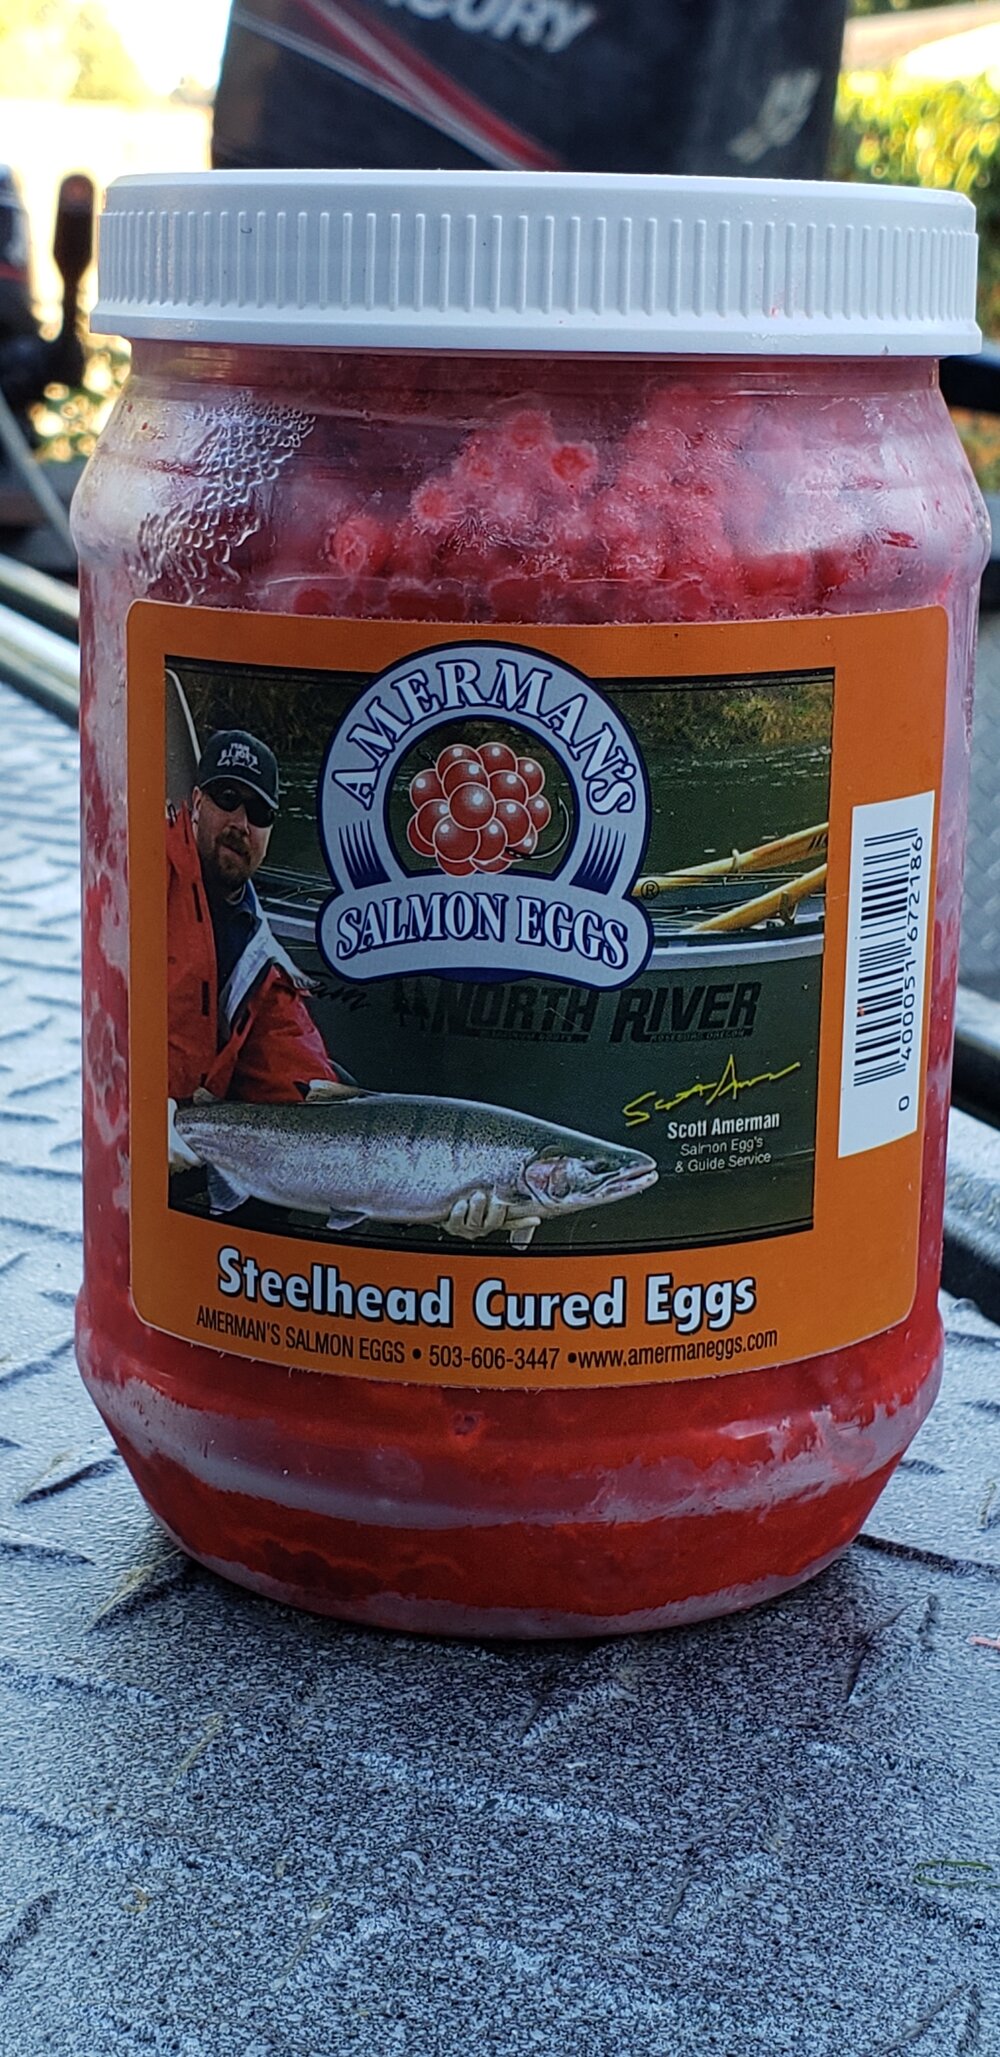 Salmon Eggs cured for Steelhead Fishing — Amerman's Salmon Eggs